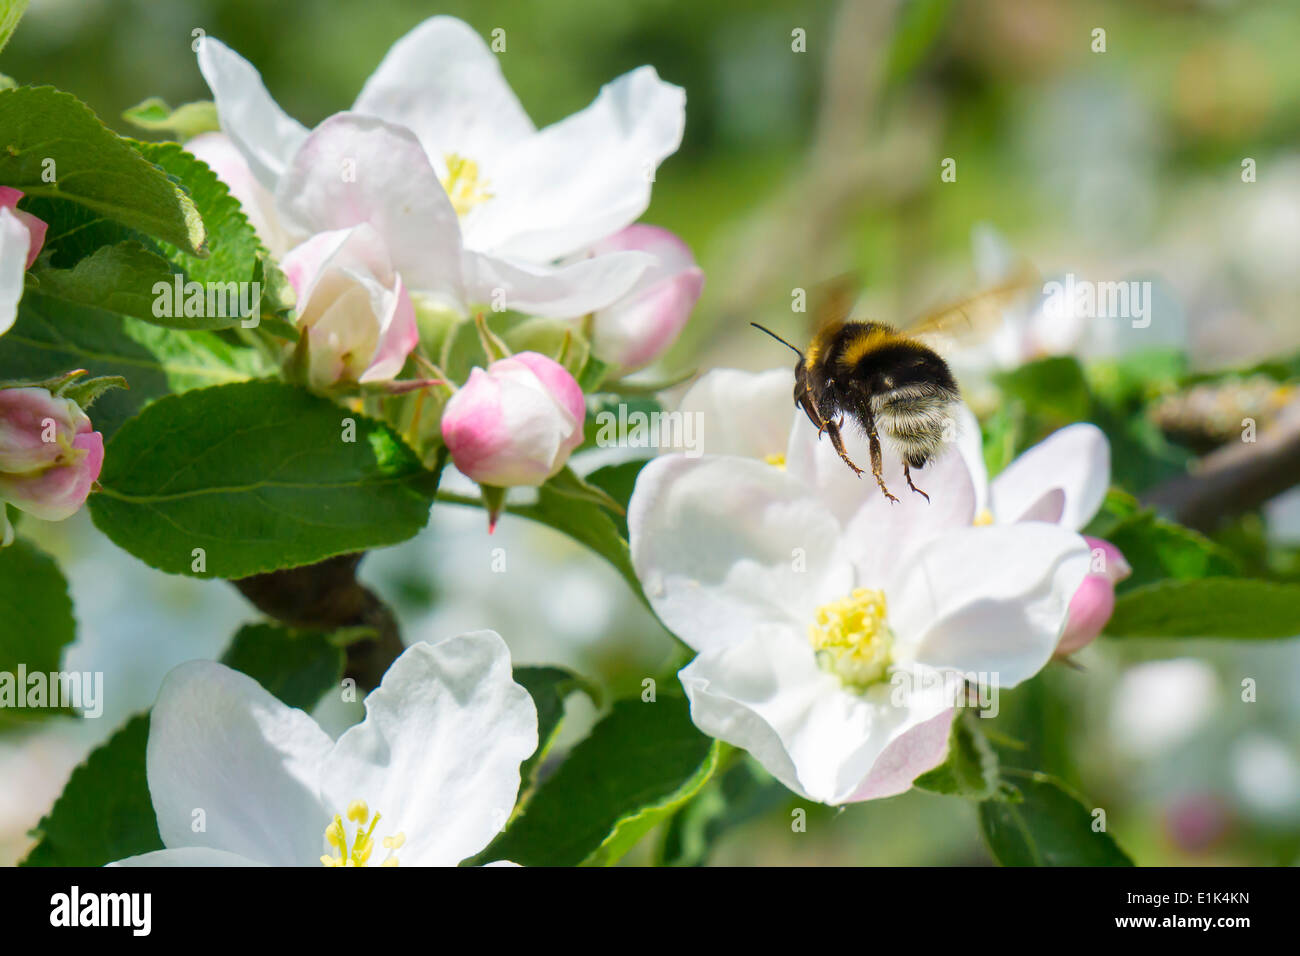 Germany, Hesse, Kronberg, Bumblebee at white blossom of apple tree Stock Photo